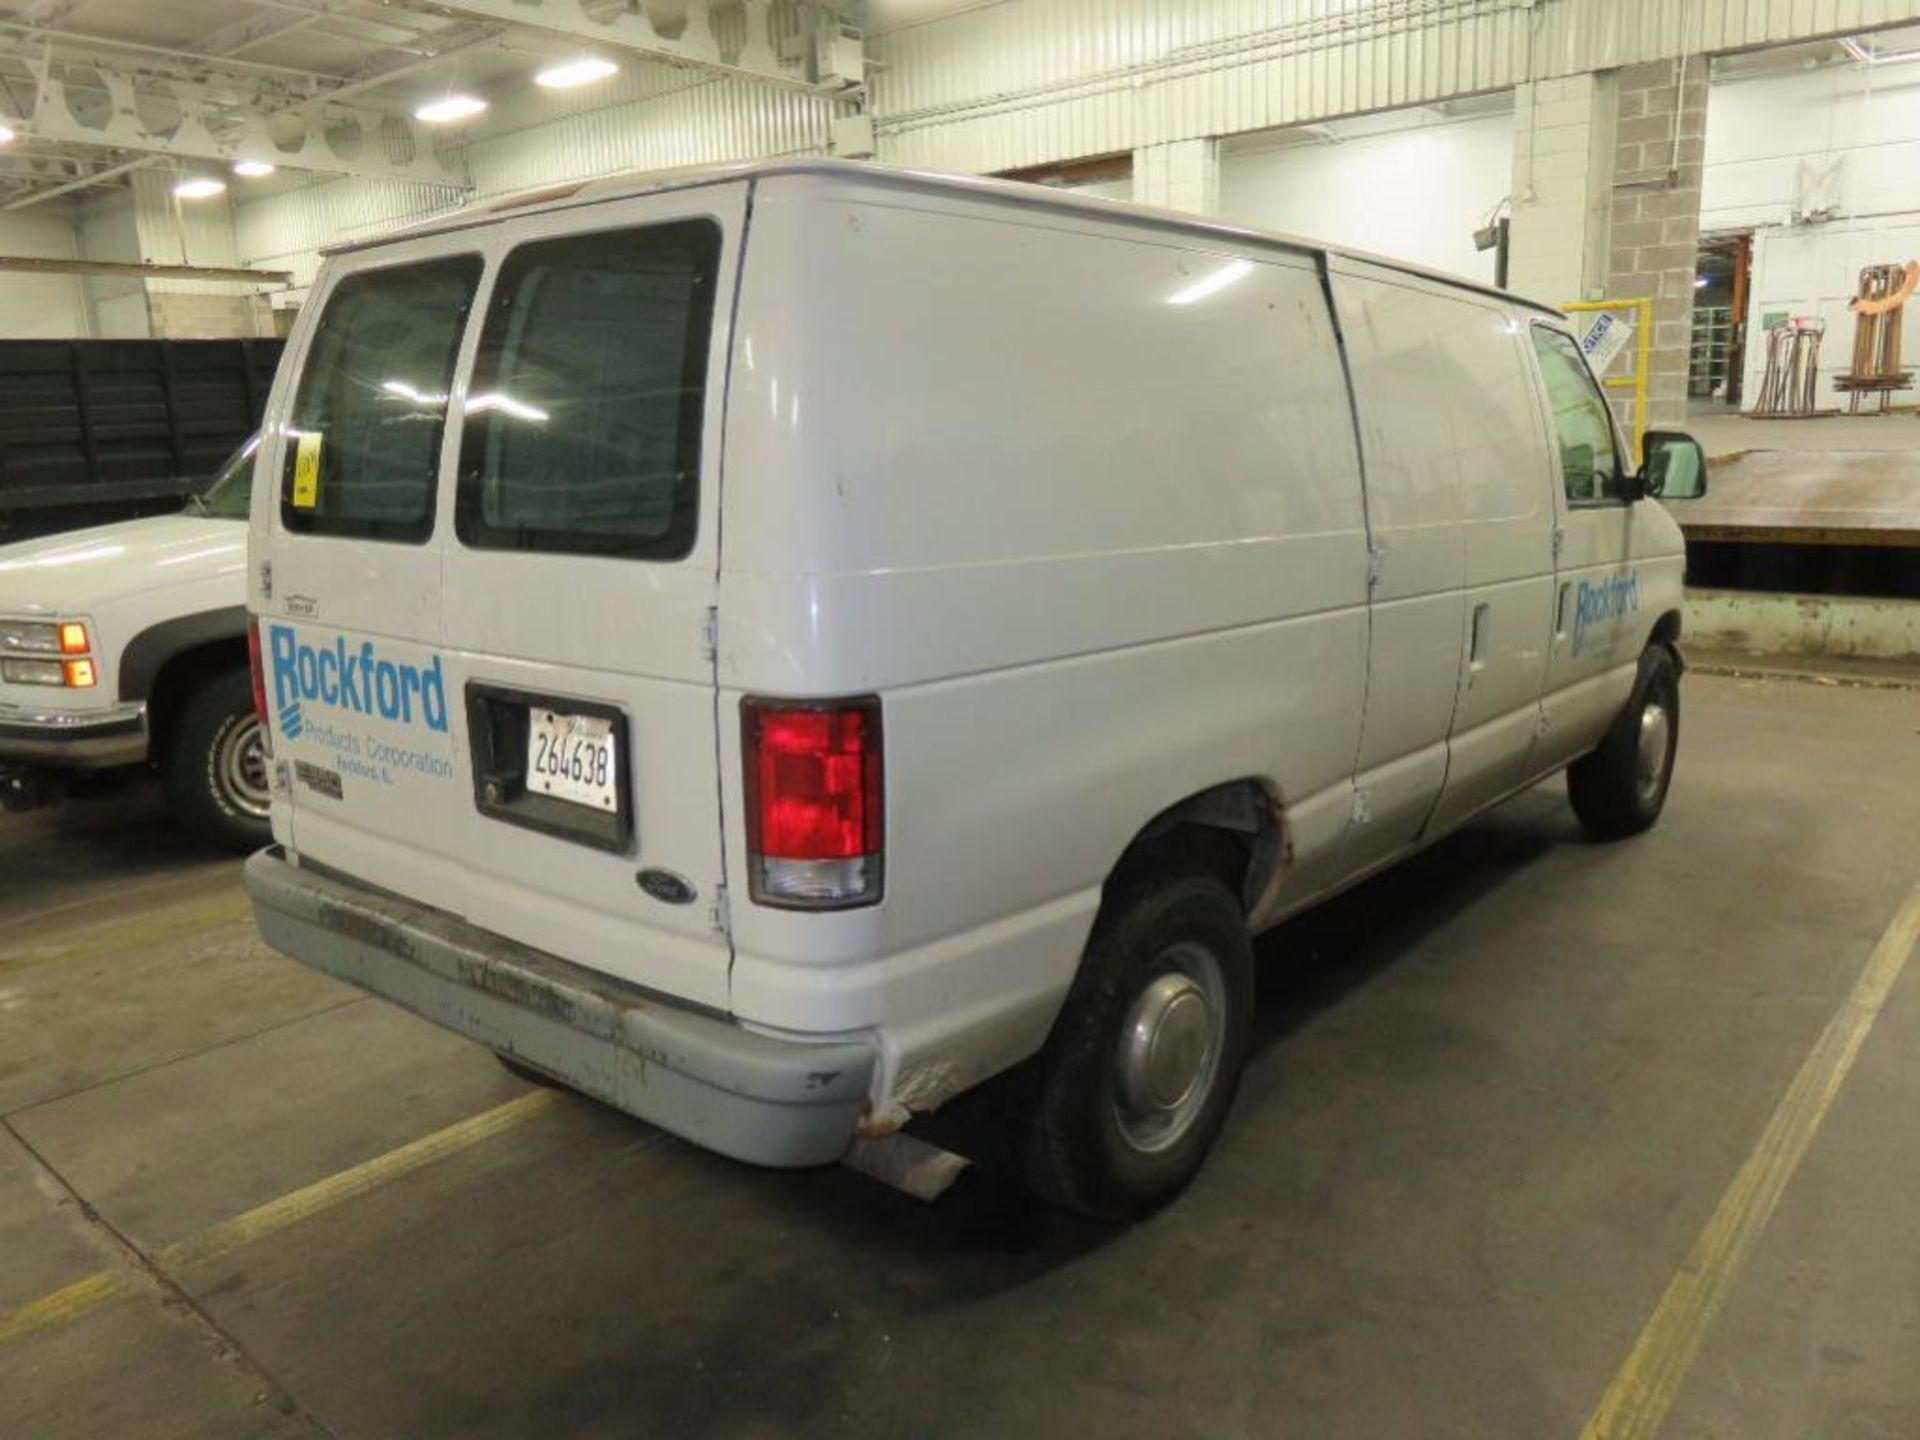 2000 Ford 1 Ton Cargo Van, VIN 1FTSE34FXYHA62769 (in loading dock) (Location C) - Image 3 of 3